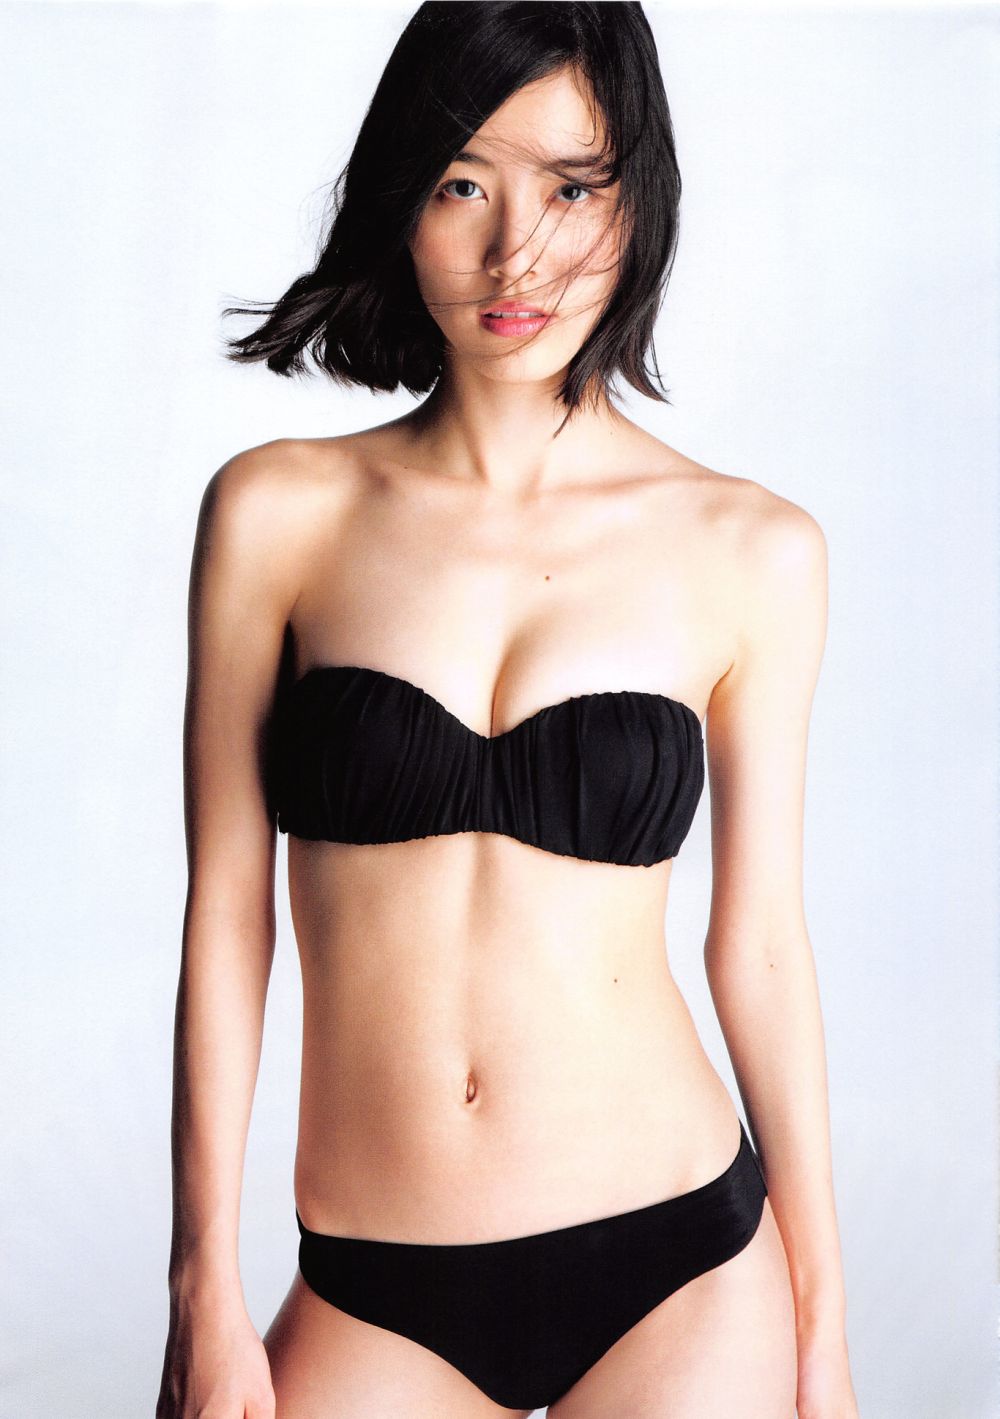 Jurina Matsui Sexy and Hottest Photos , Latest Pics